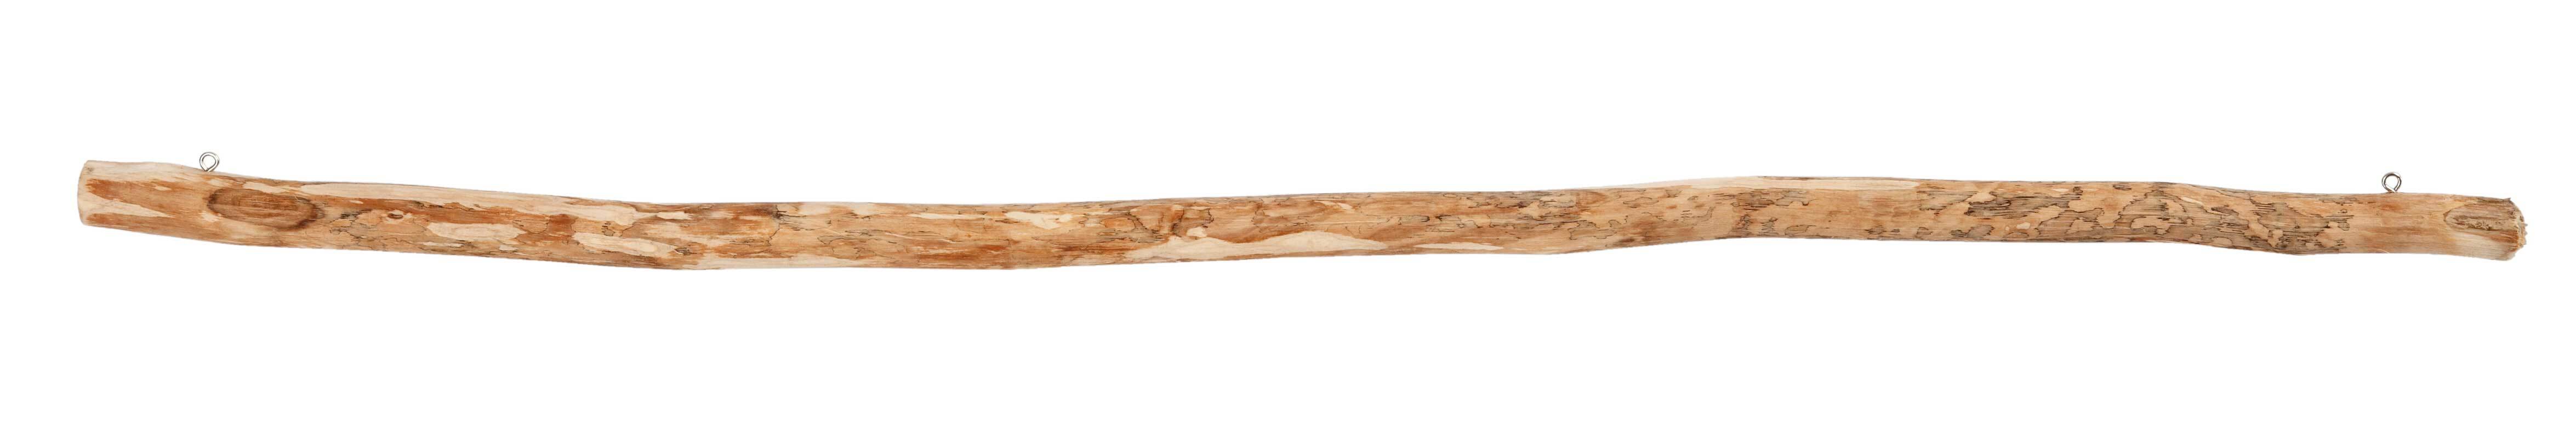 Houten stok, 60 cm